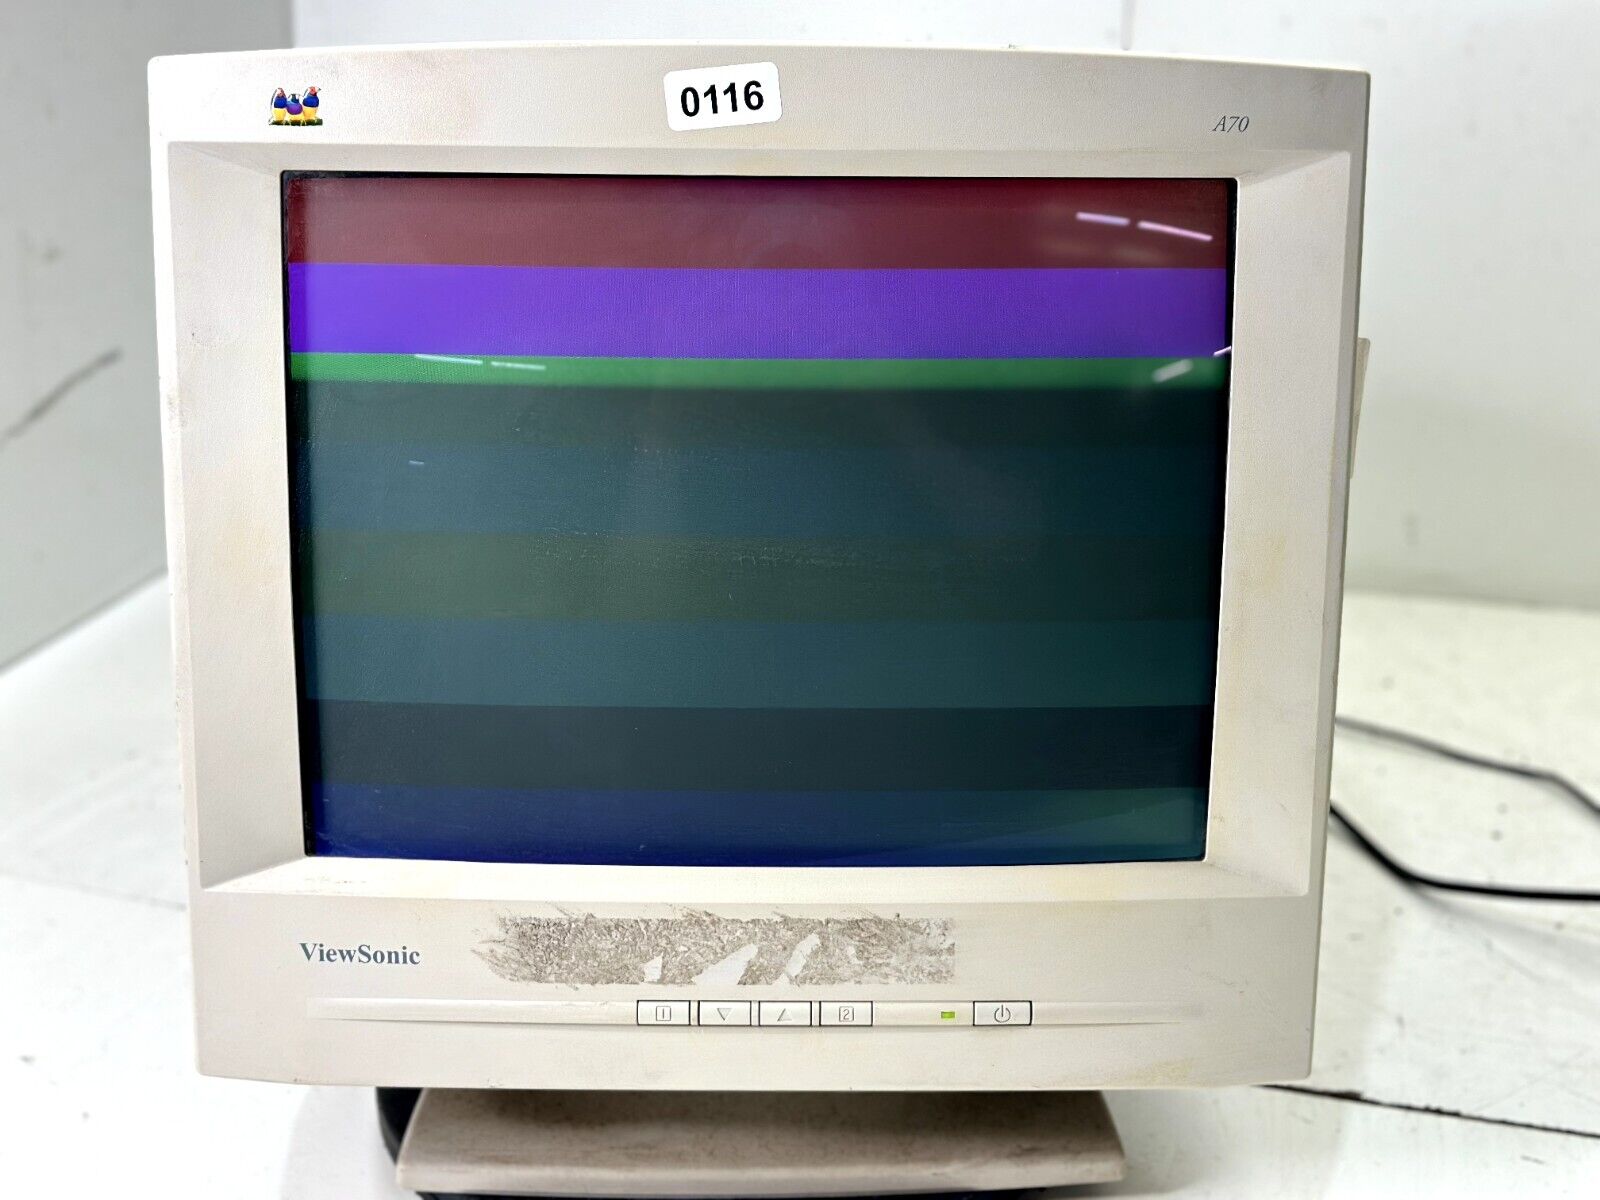 Viewsonic A70 17” SVGA CRT Computer Monitor VCDTS21543-3R 1280x1024